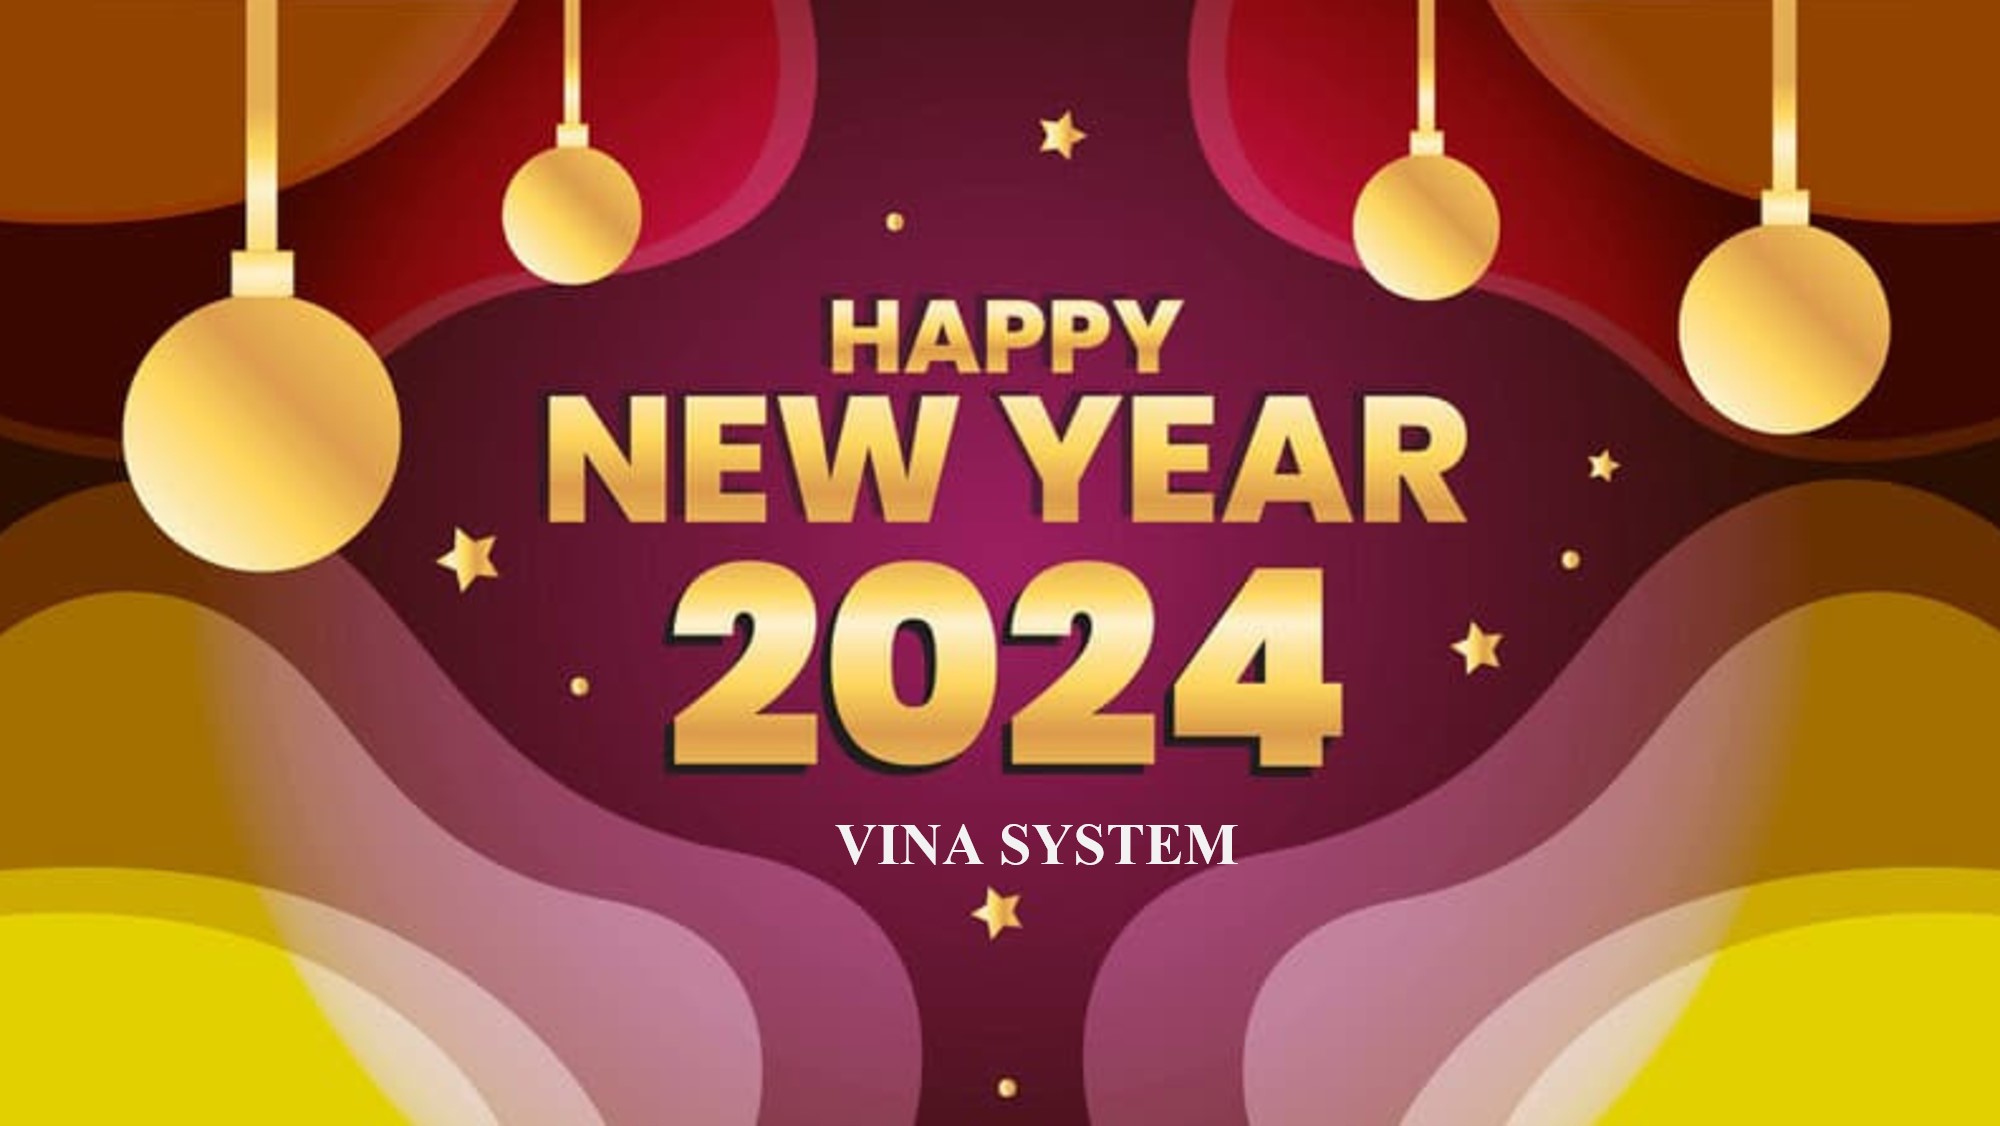 HAPPY NEW YEAR 2024 !!